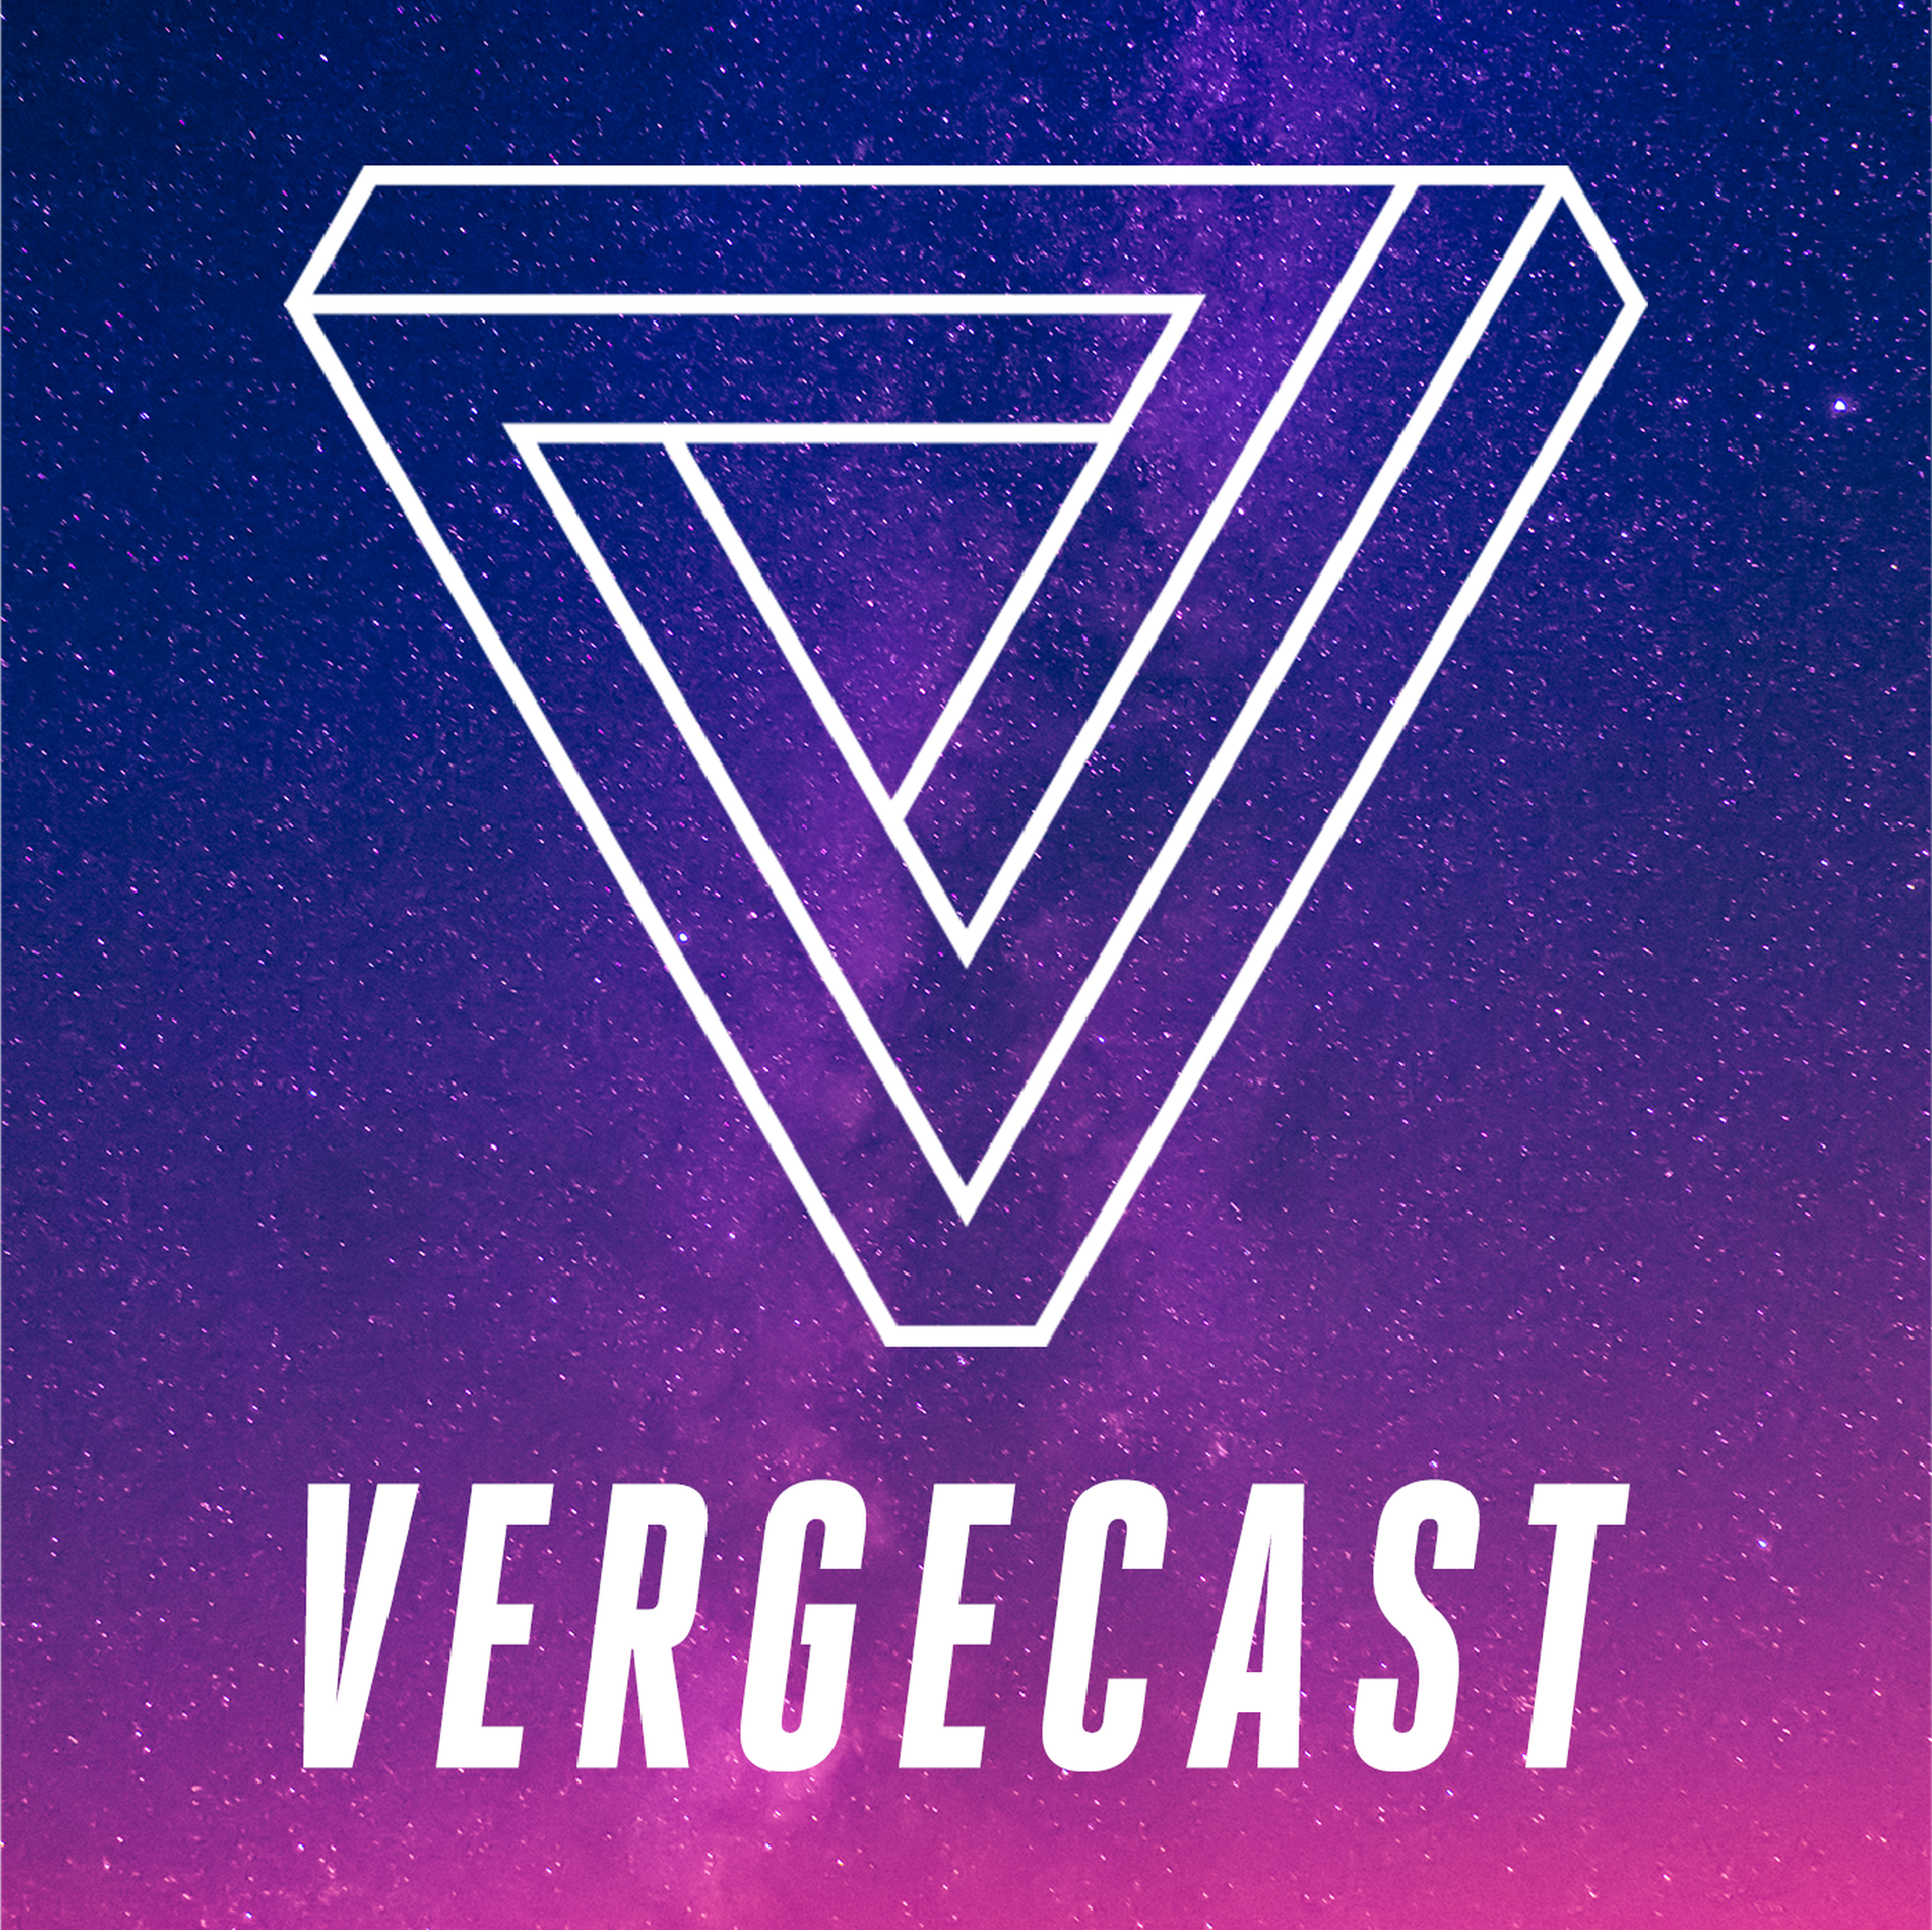 The Vergecast logo